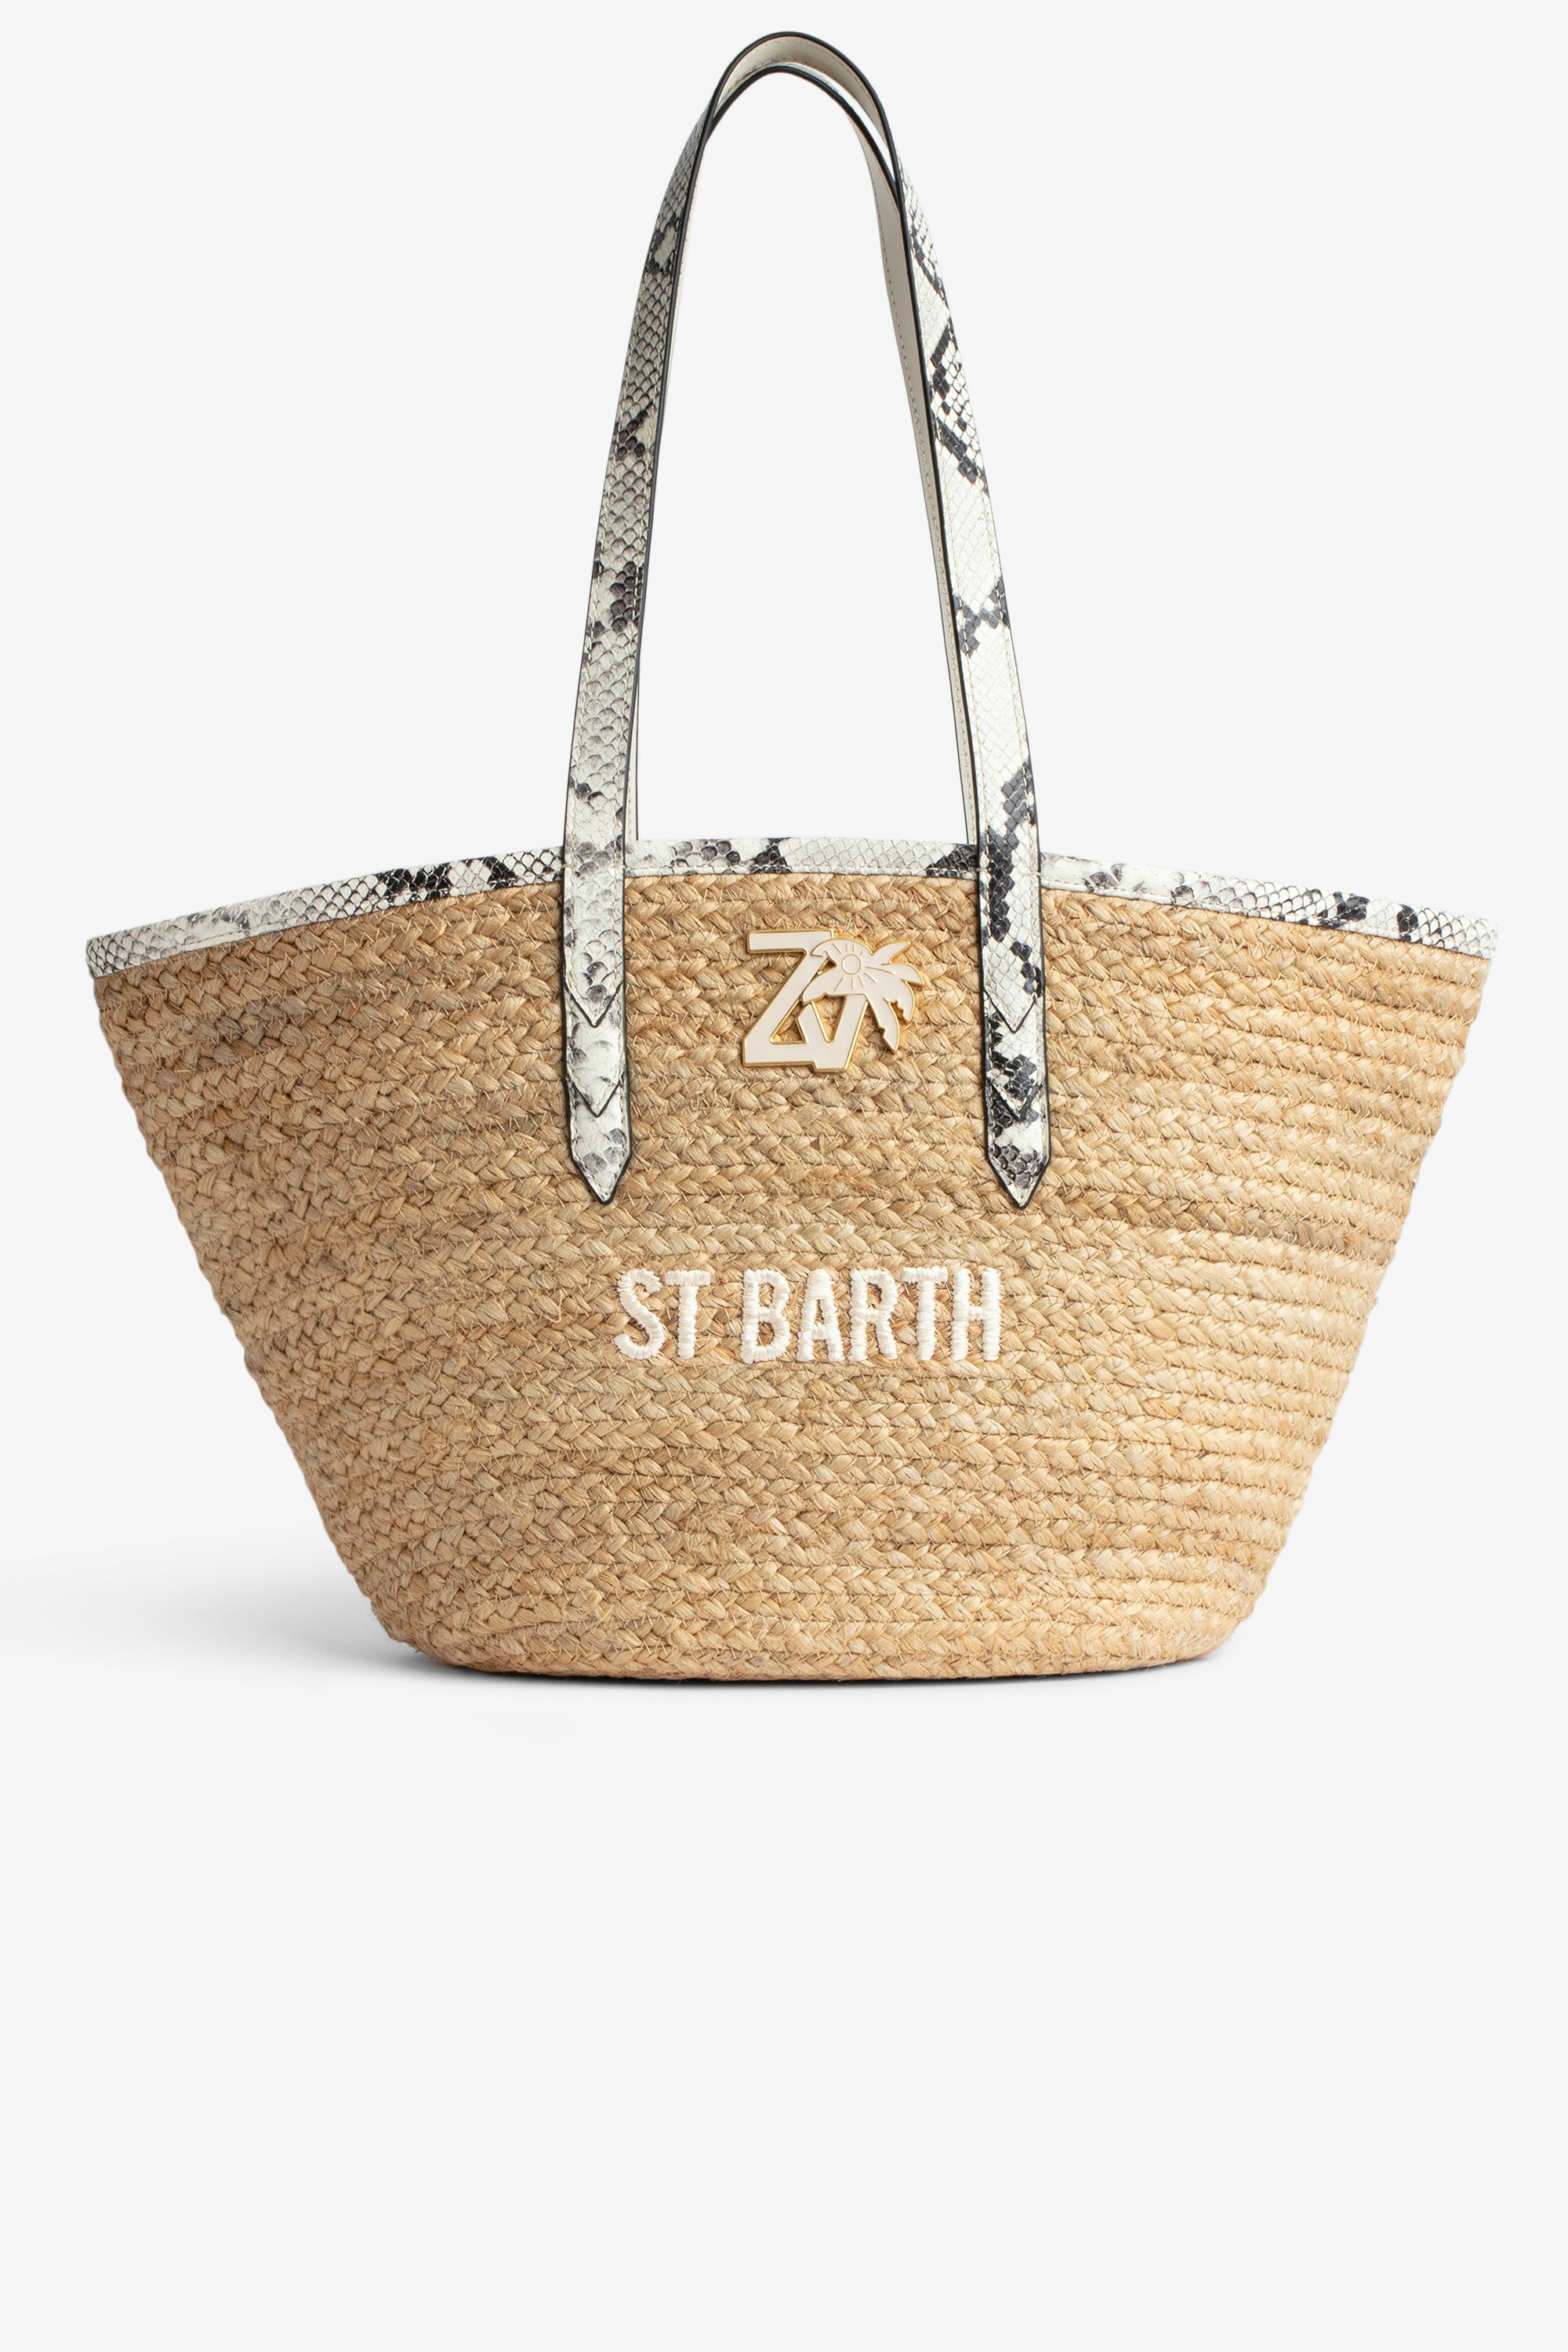 Le Beach Bag パイソンエフェクト エクリュ レザーハンドルストローバッグ 「St Barth」刺繍とチャーム付き ZV レディース